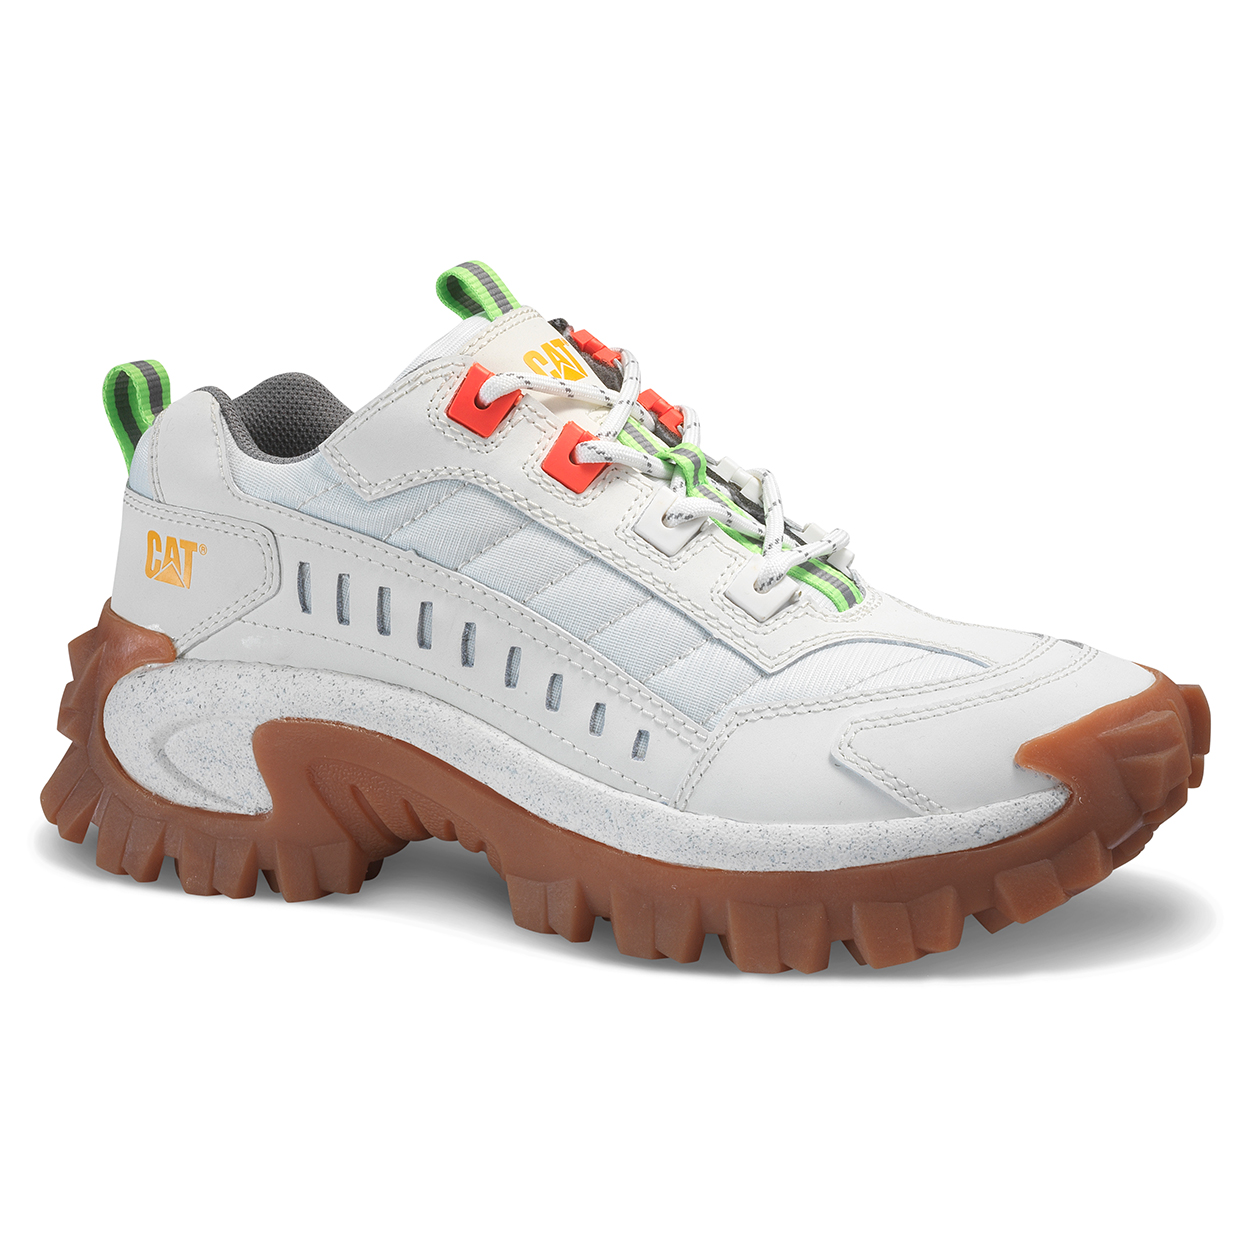 Caterpillar Sneakers Online UAE - Caterpillar Intruder Womens - White SLAOJG258